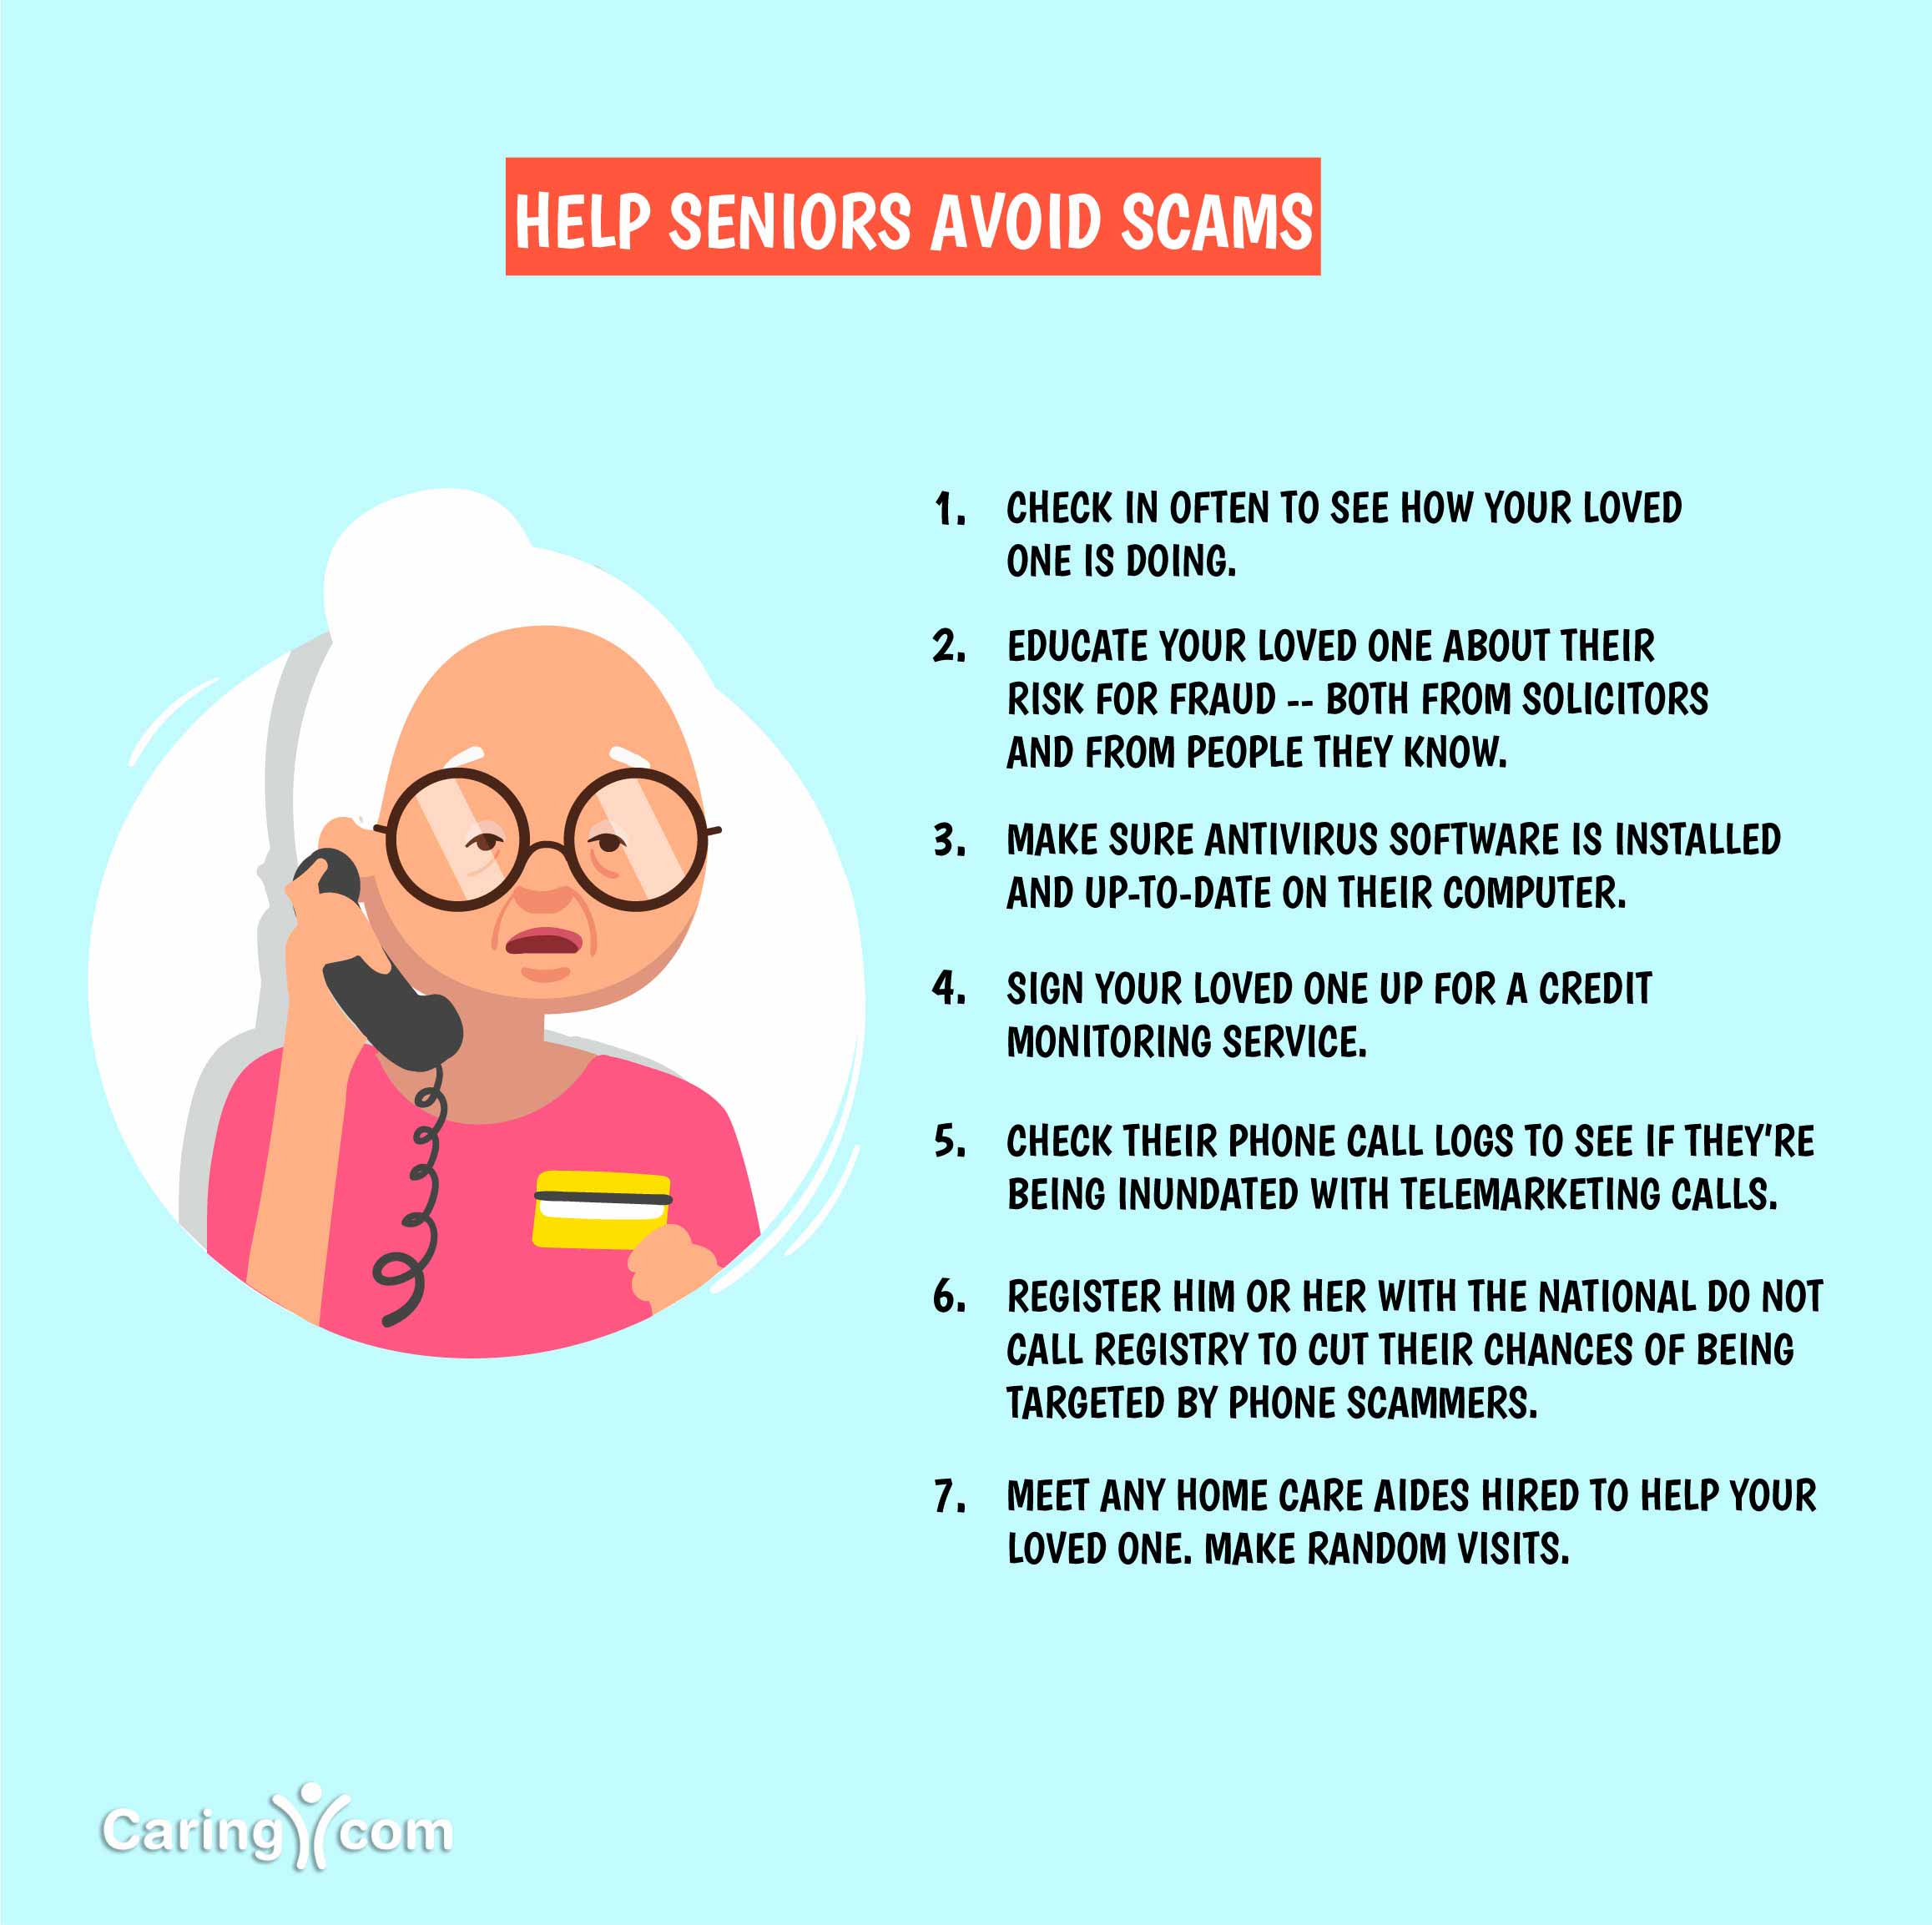 Help seniors avoid scams